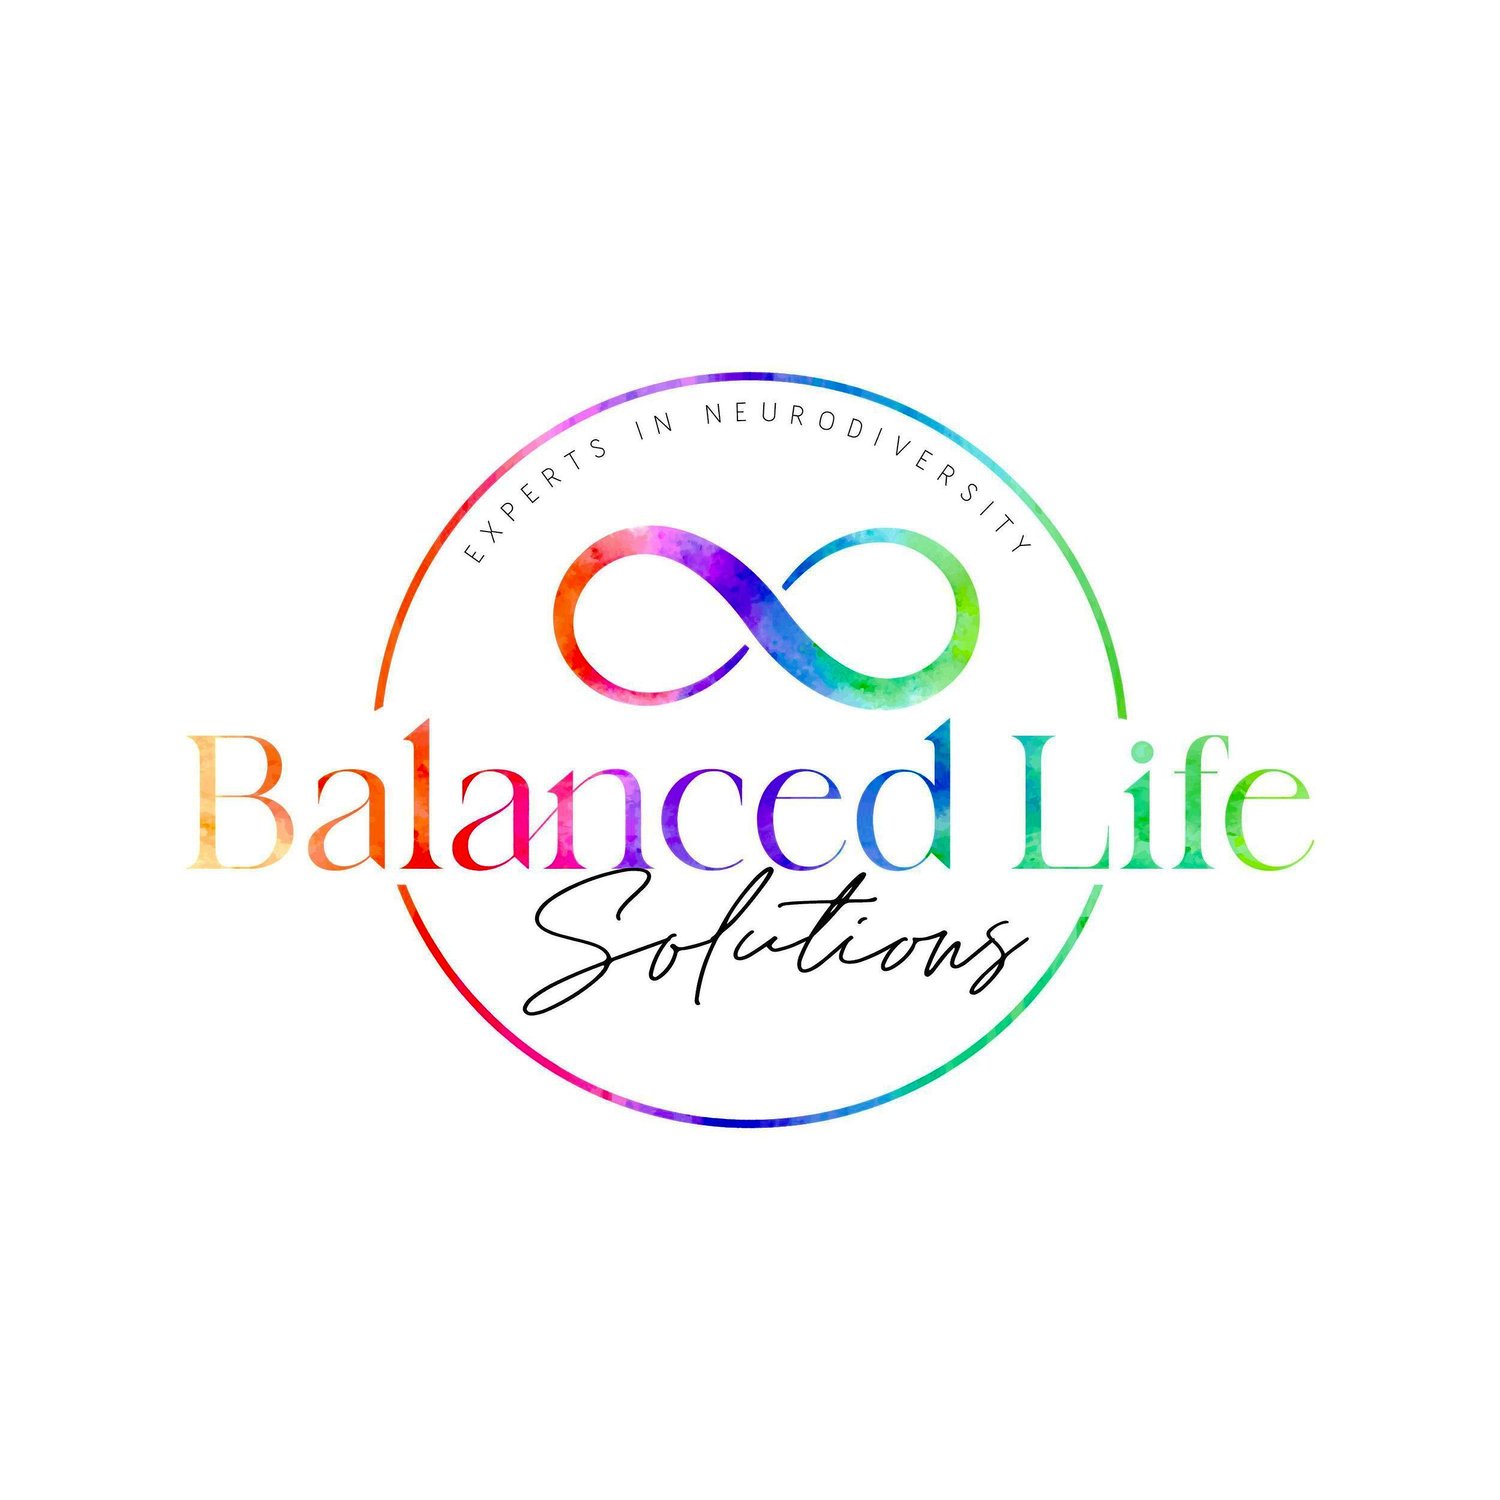 Balanced Life Solutions